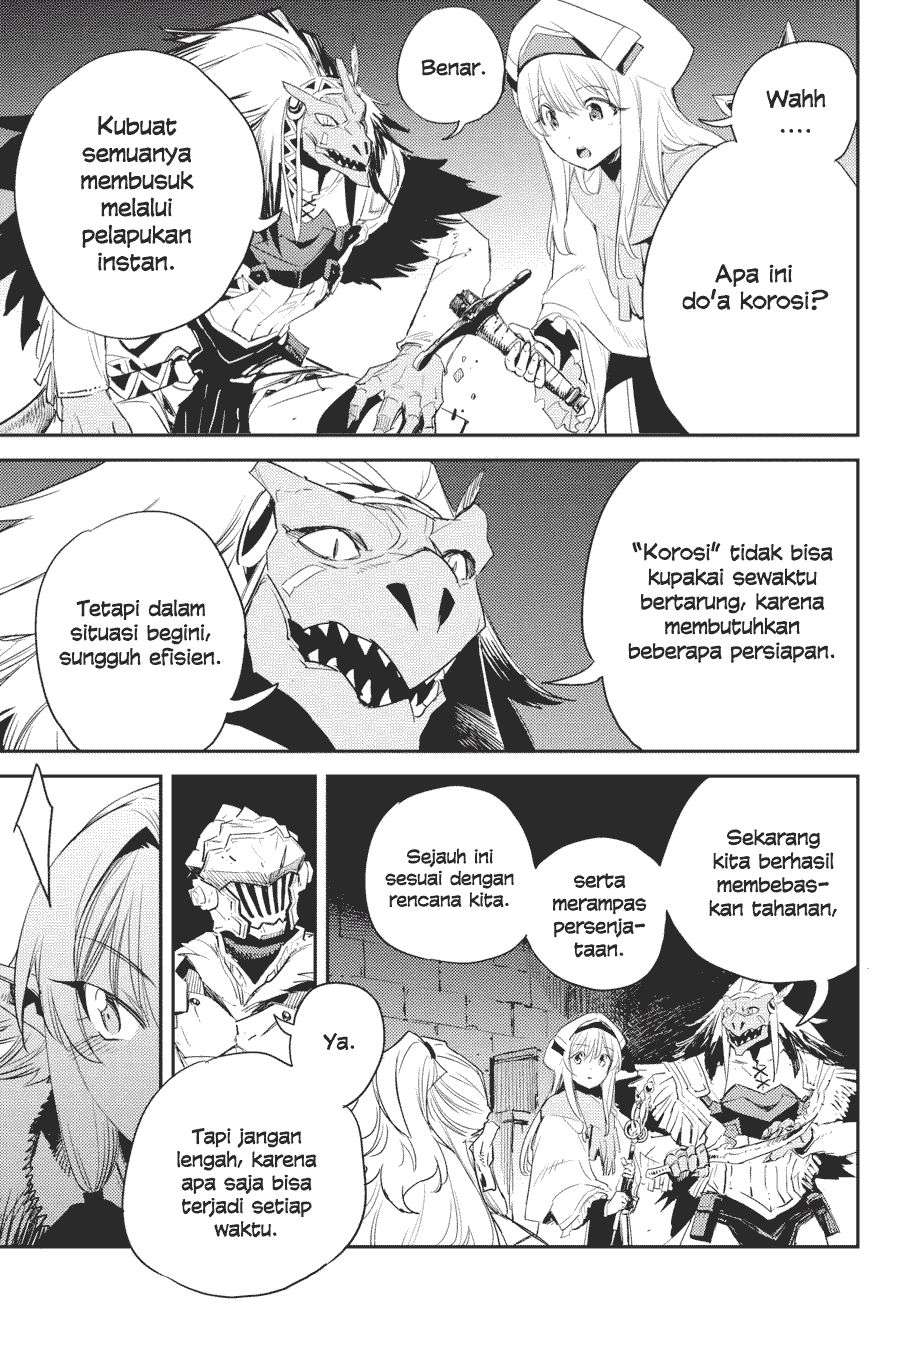 Goblin Slayer Chapter 49 Bahasa Indonesia